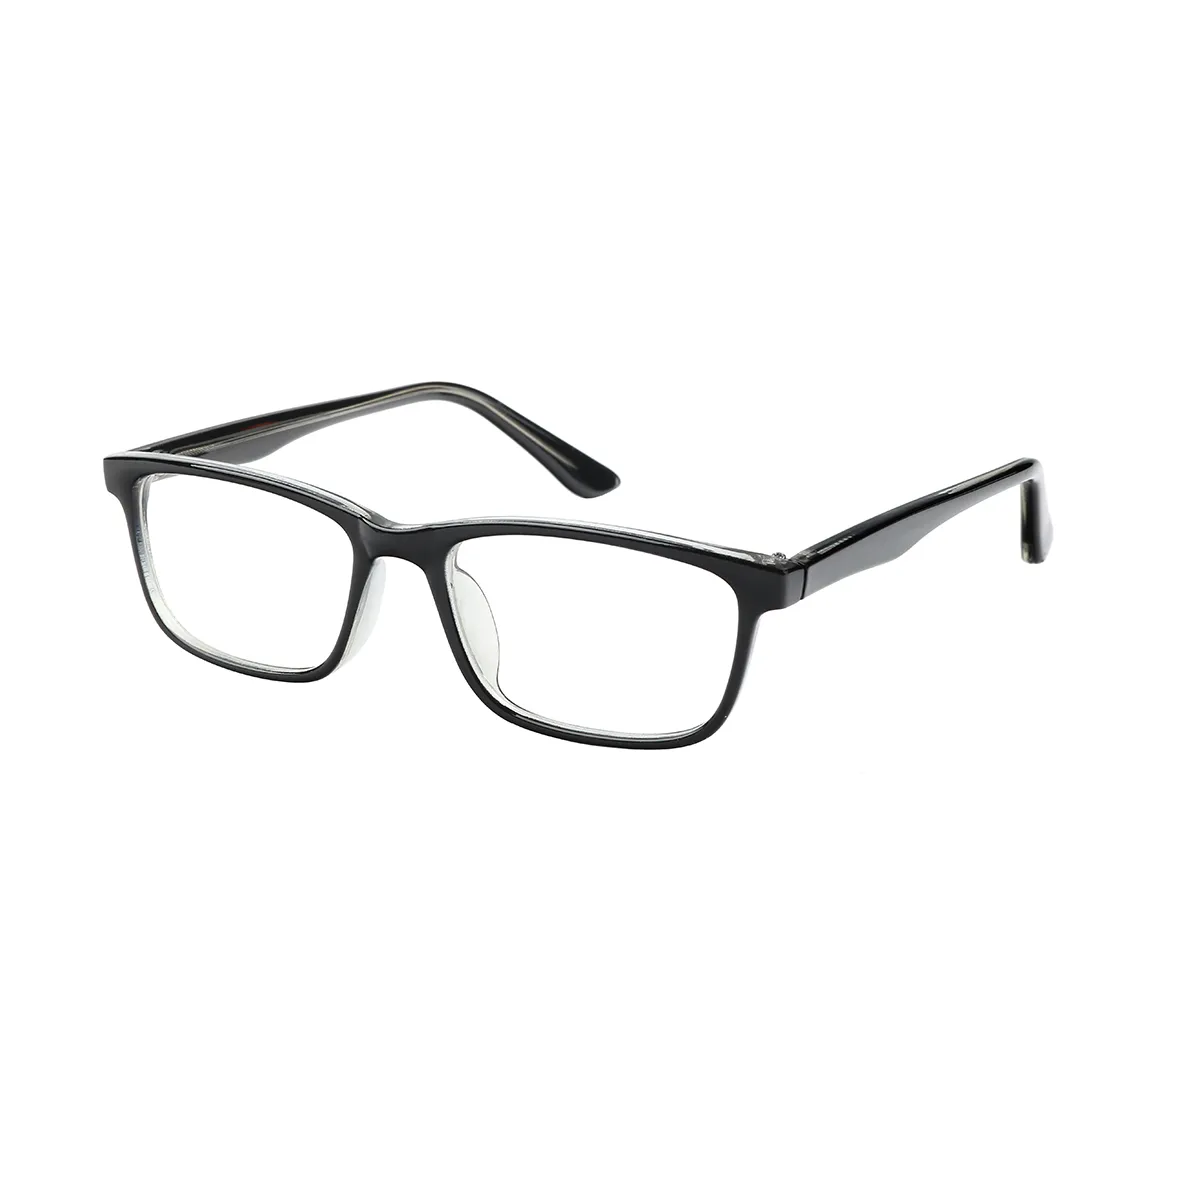 Aggy - Rectangle Black-Transparent Glasses for Women - EFE